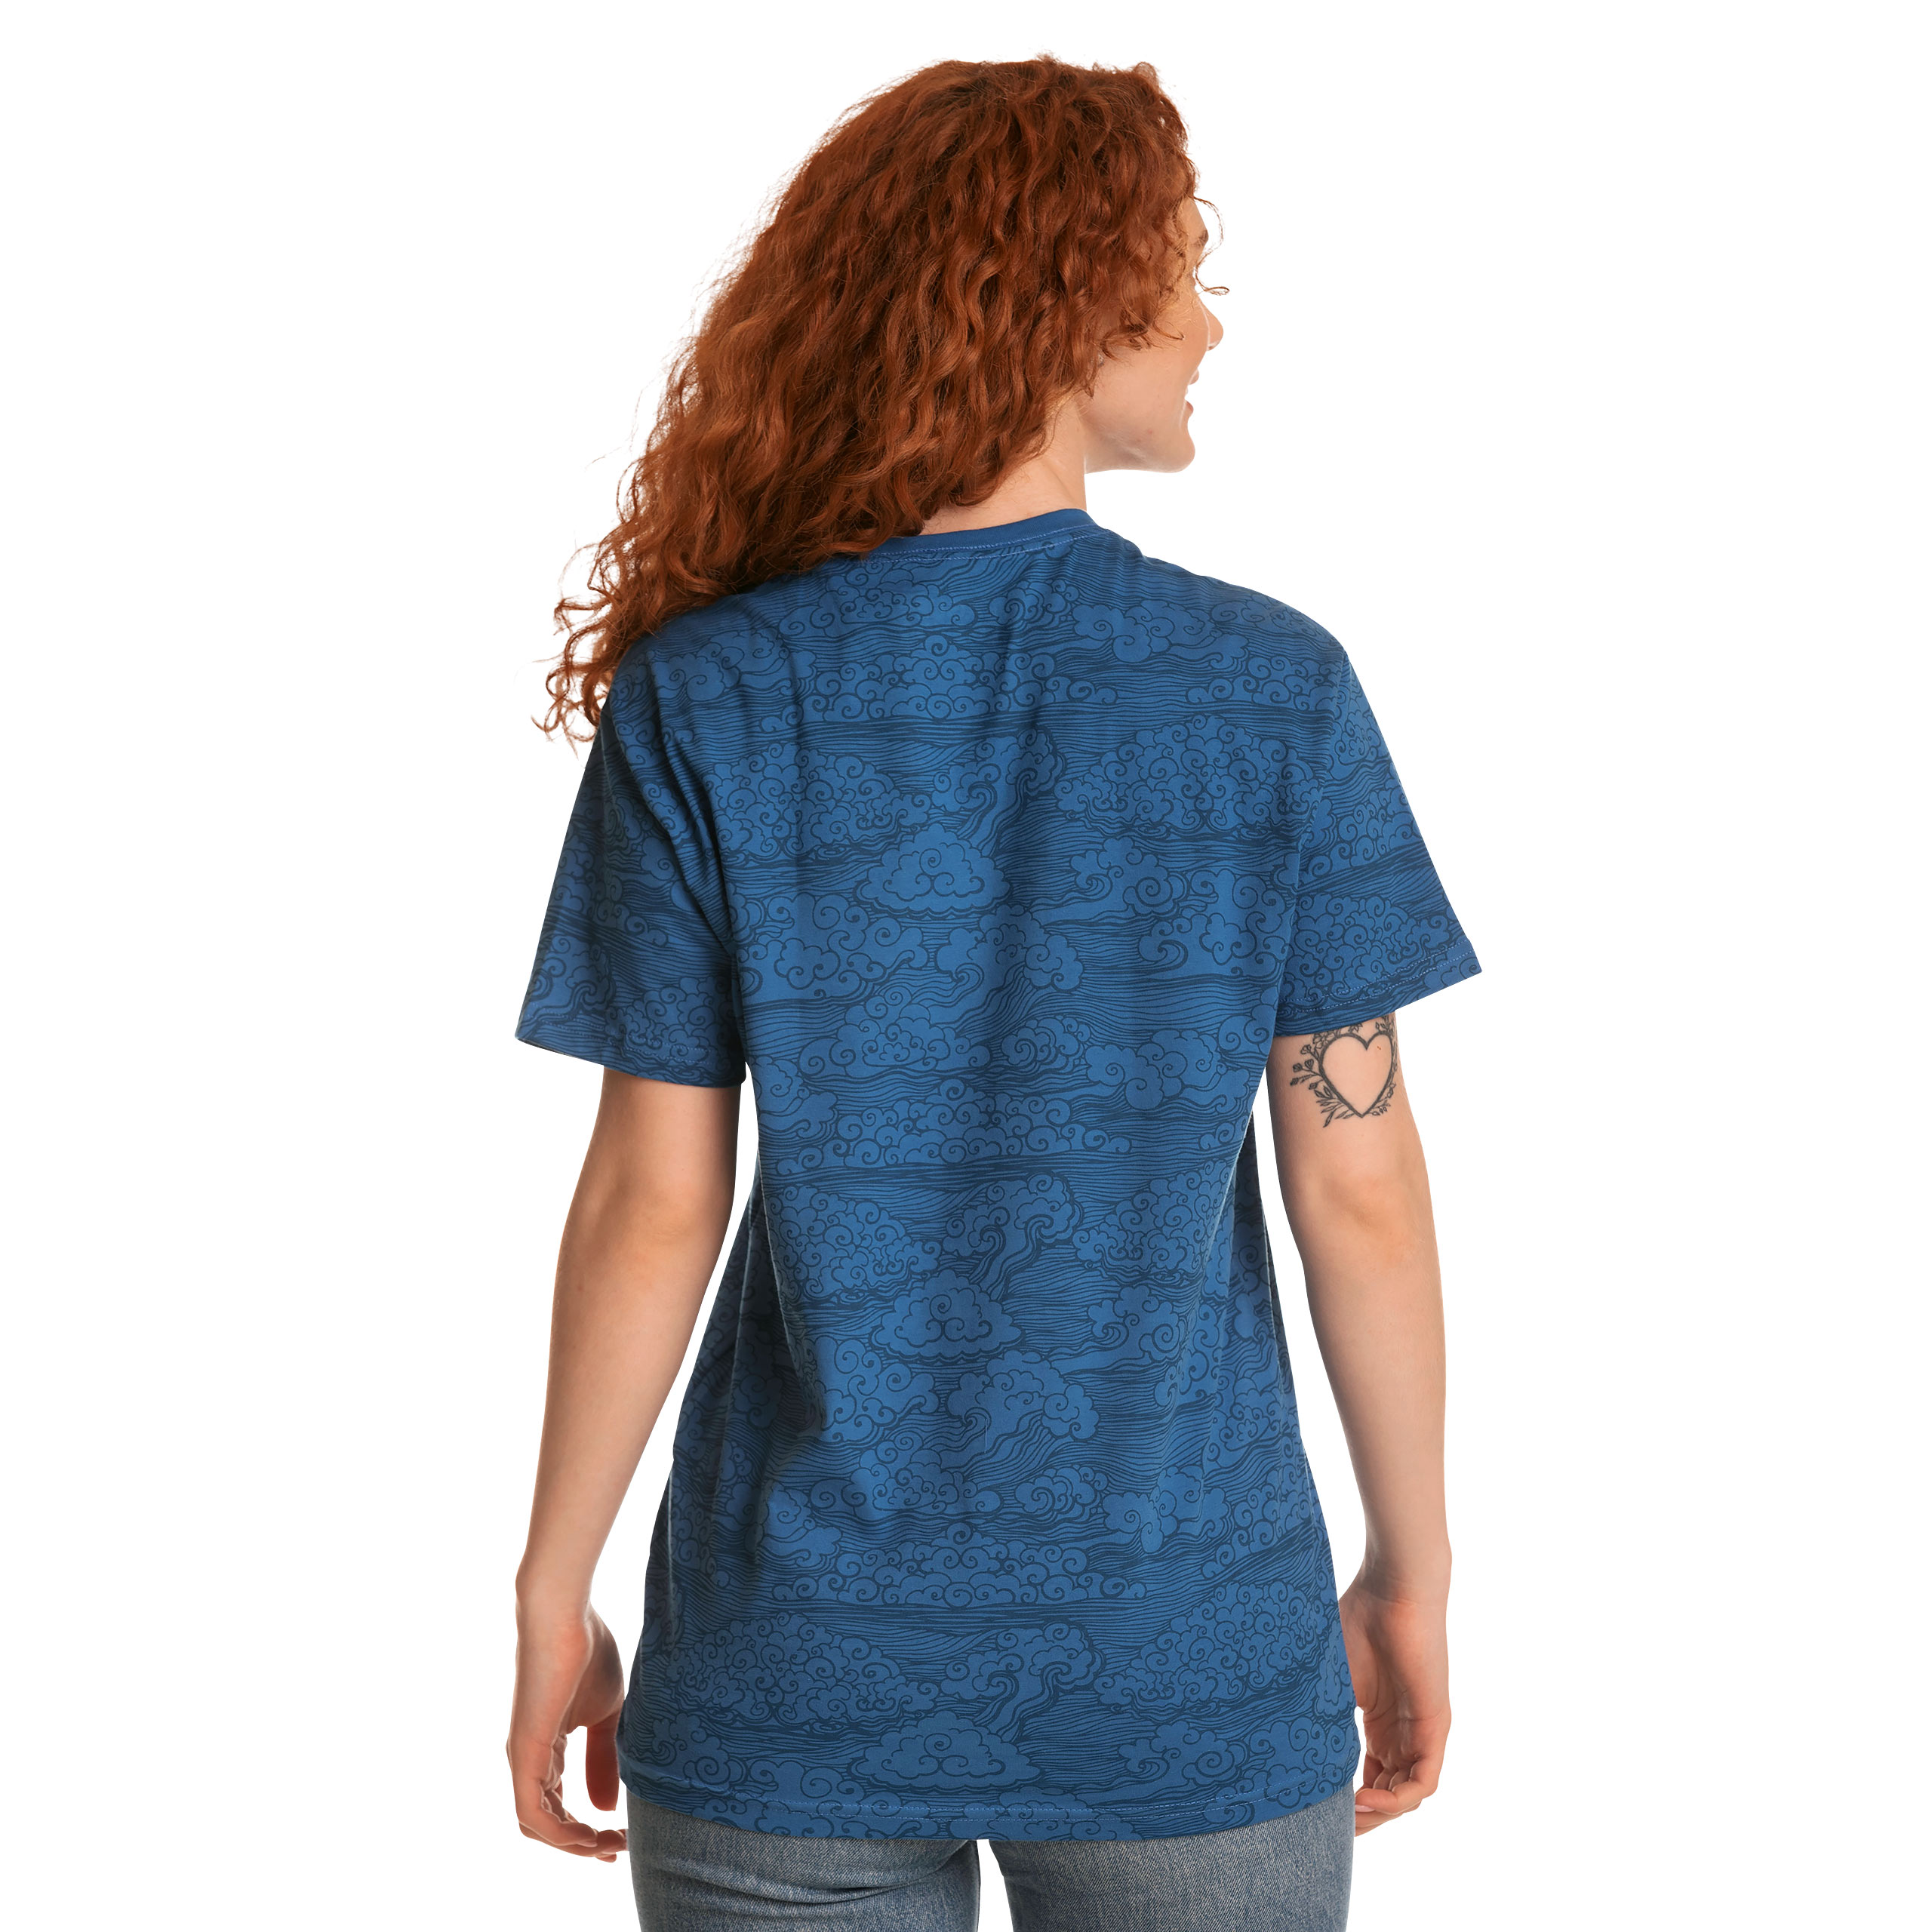 League of Legends - Logo T-Shirt Blue